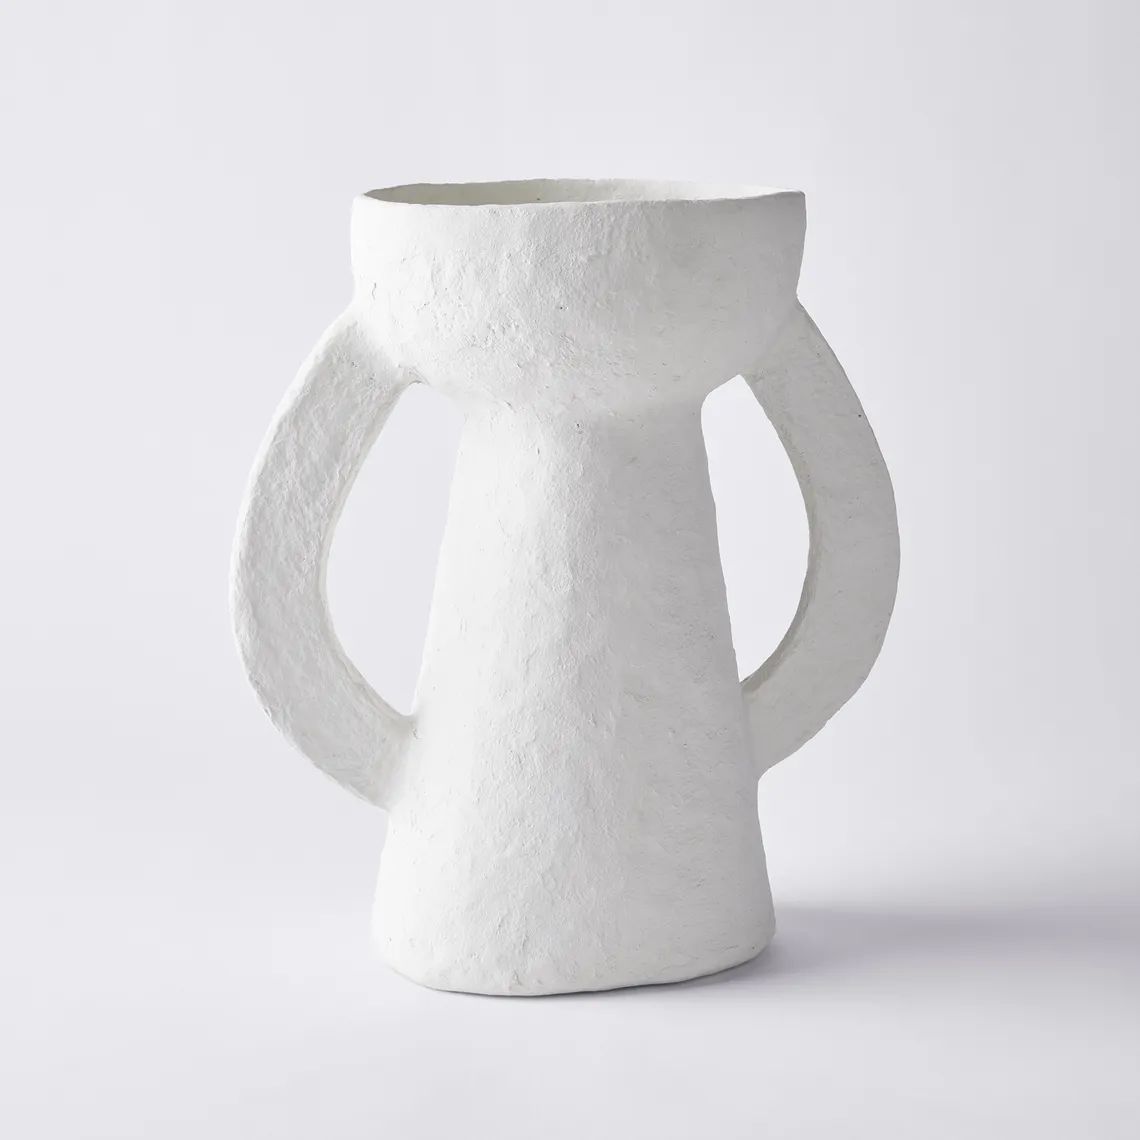 Serax Paper Mache Vessels by Marie Michielssen | Food52